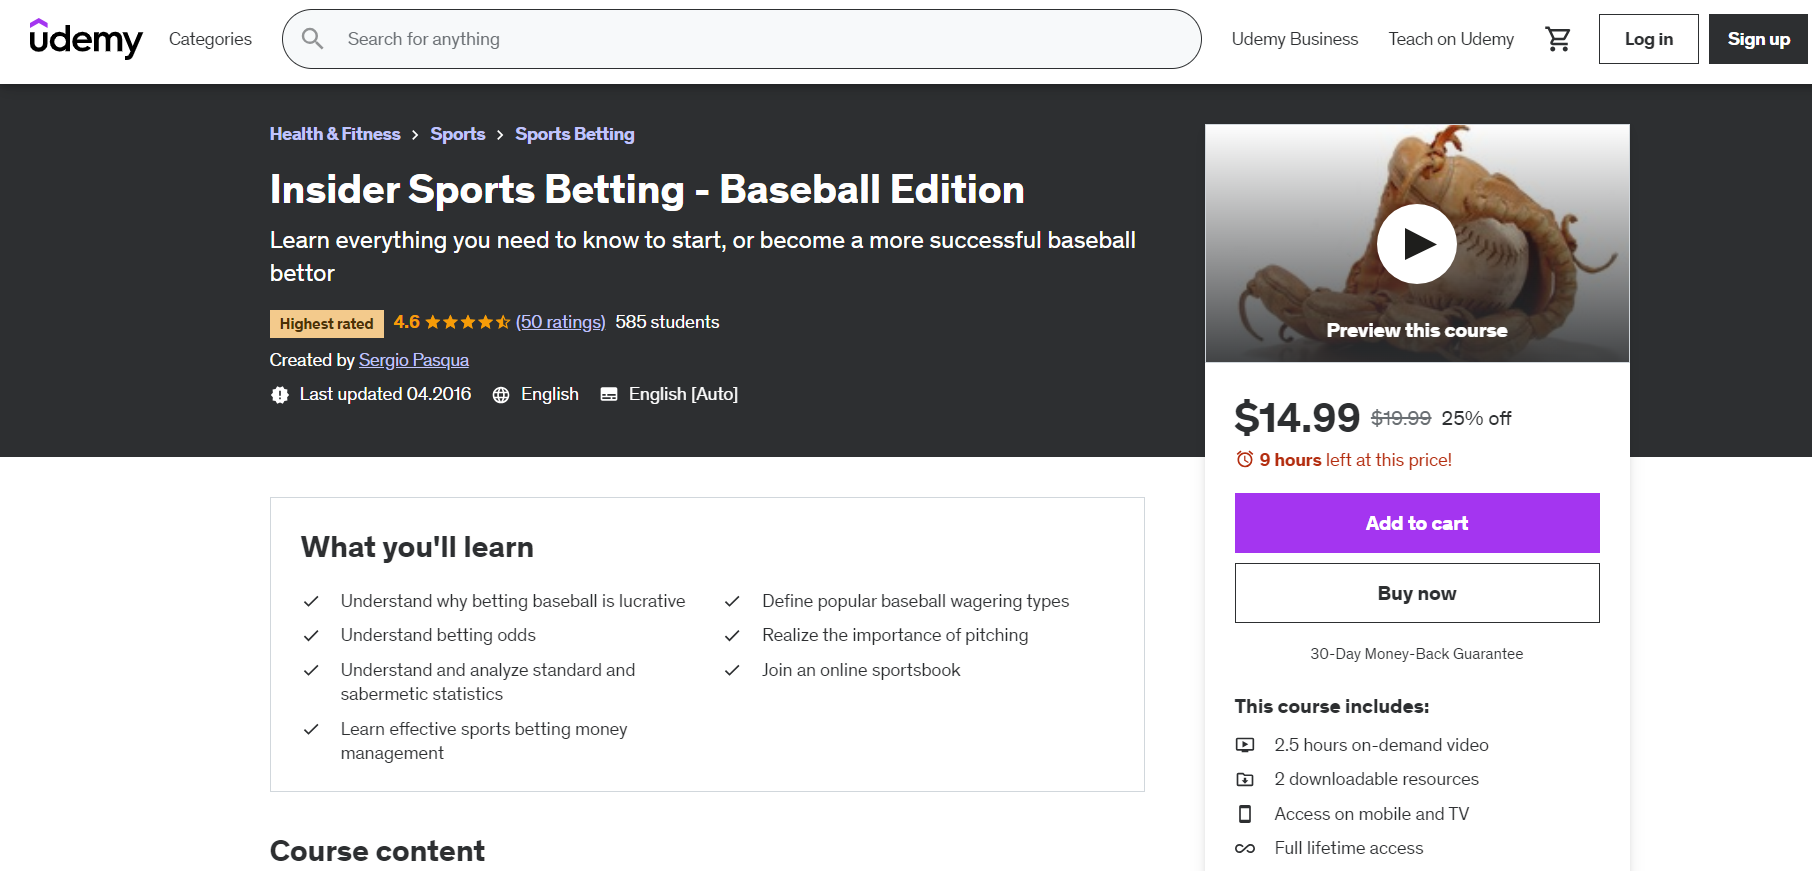 Insider Sports Betting - Baseball Edition